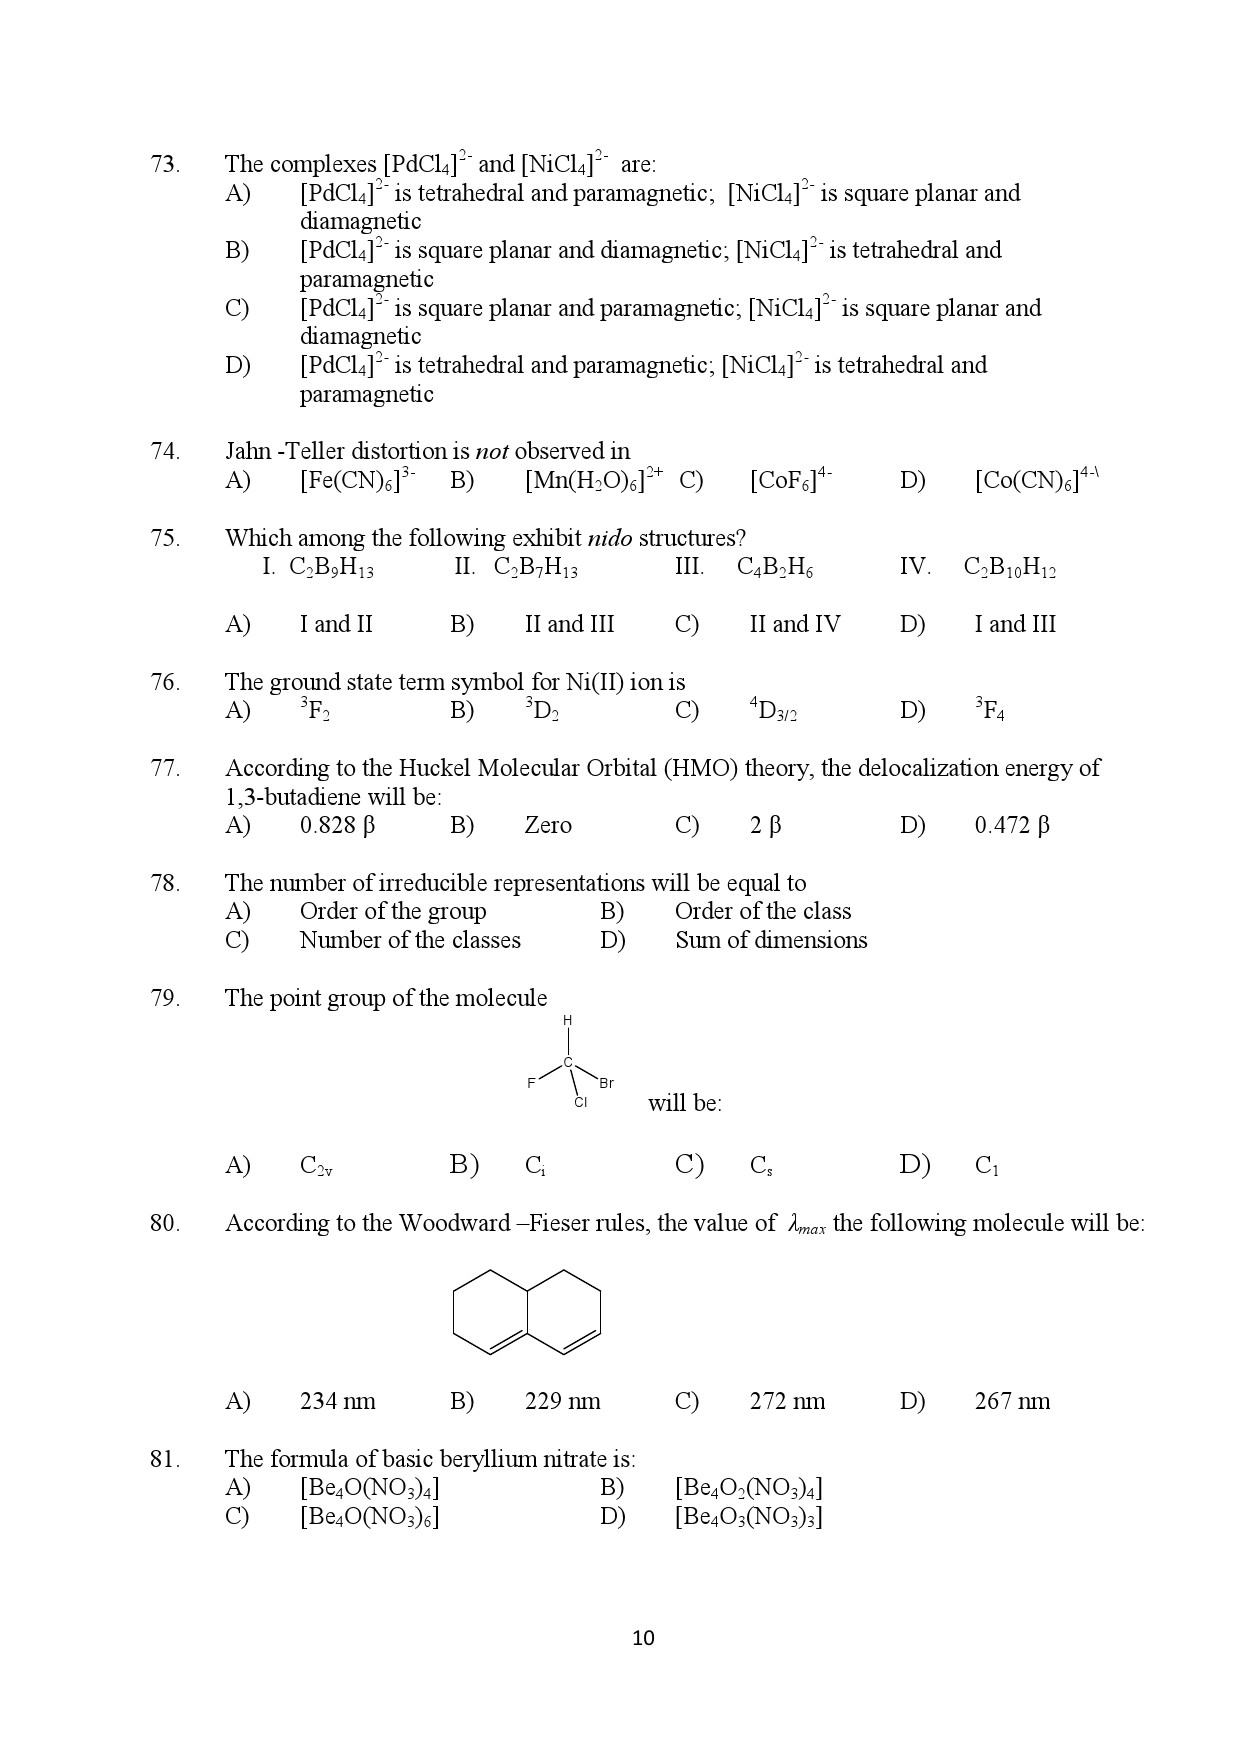 Kerala SET Chemistry Exam Question Paper February 2020 10